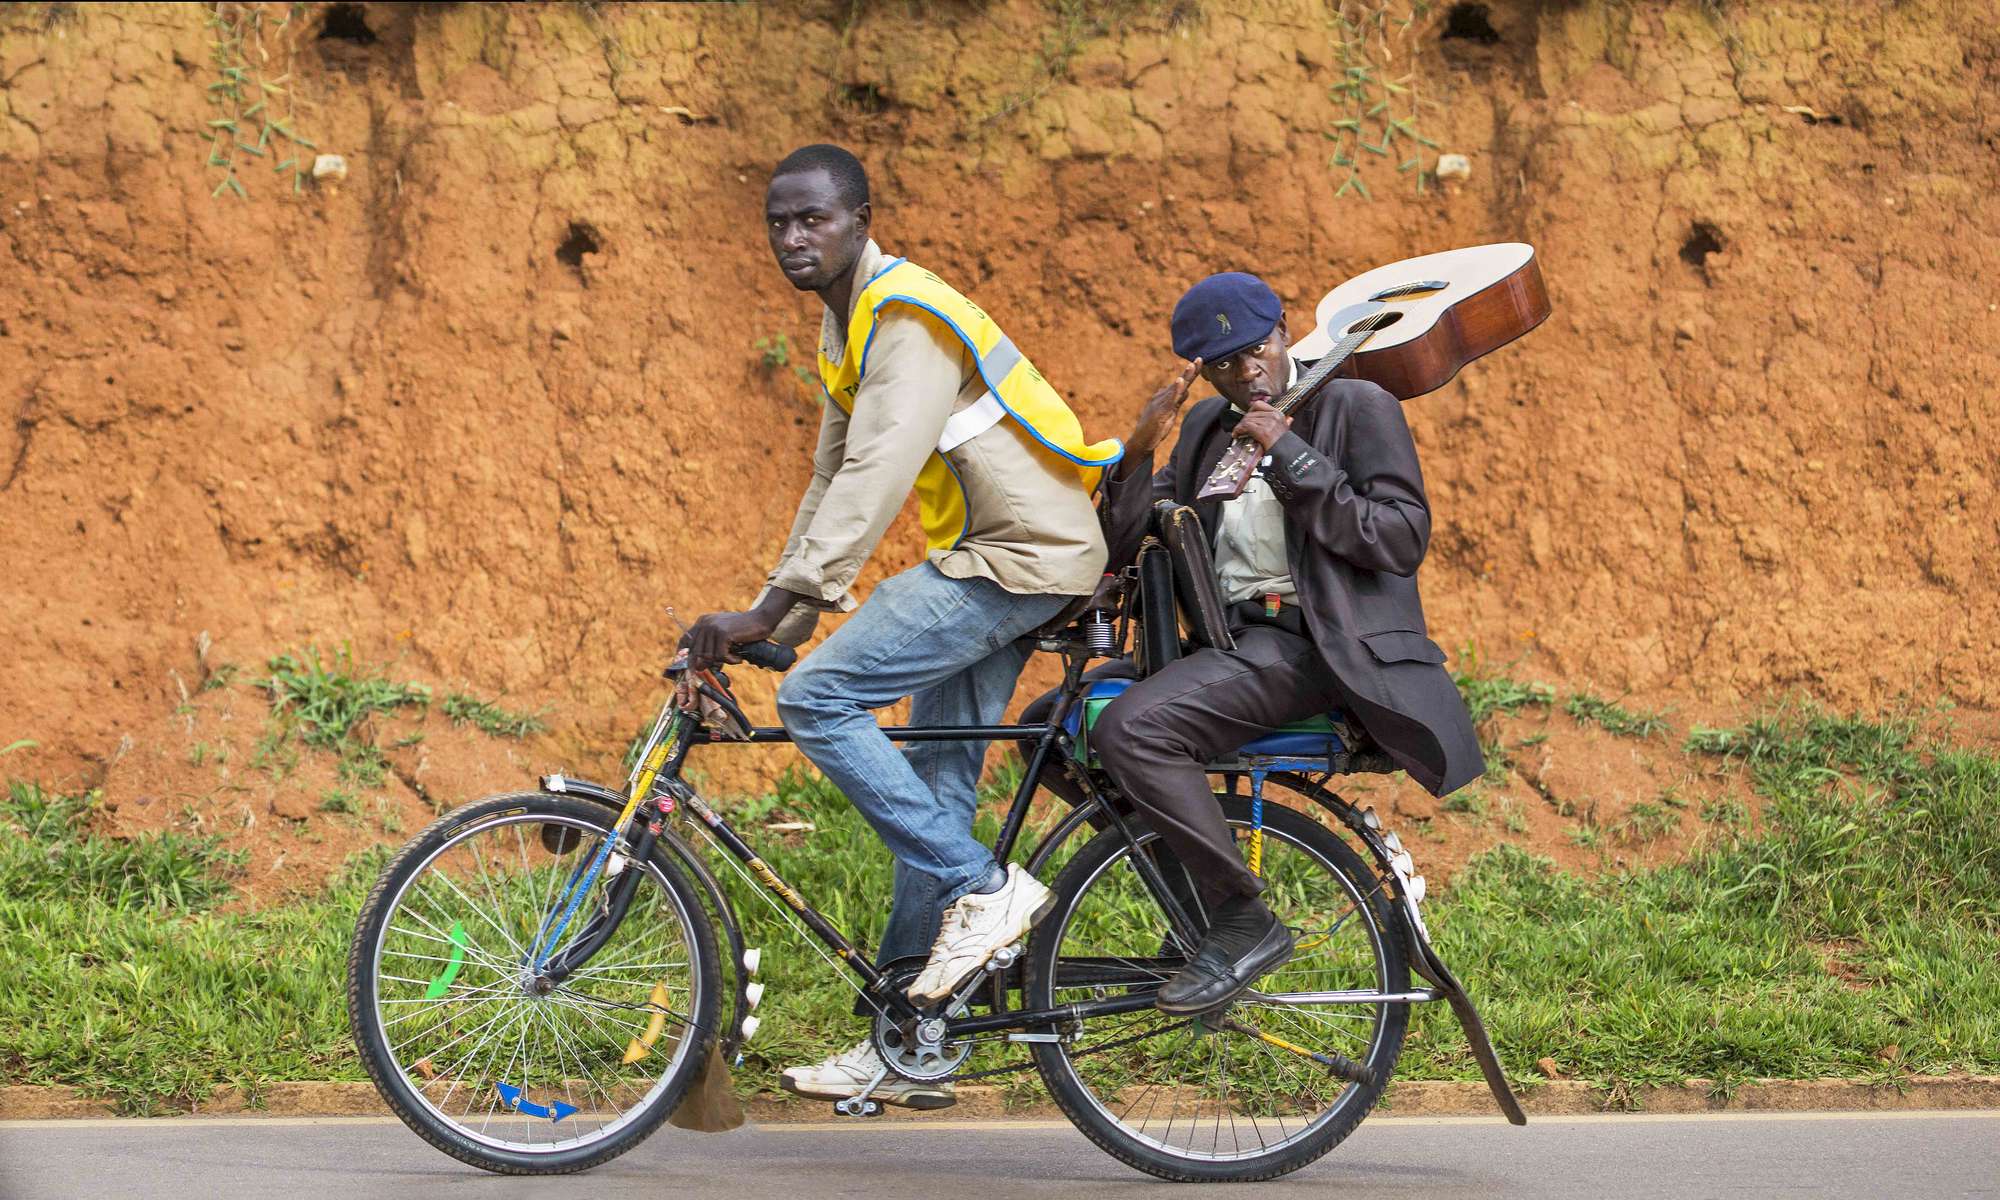 Along the road to Kigali, Rwanda